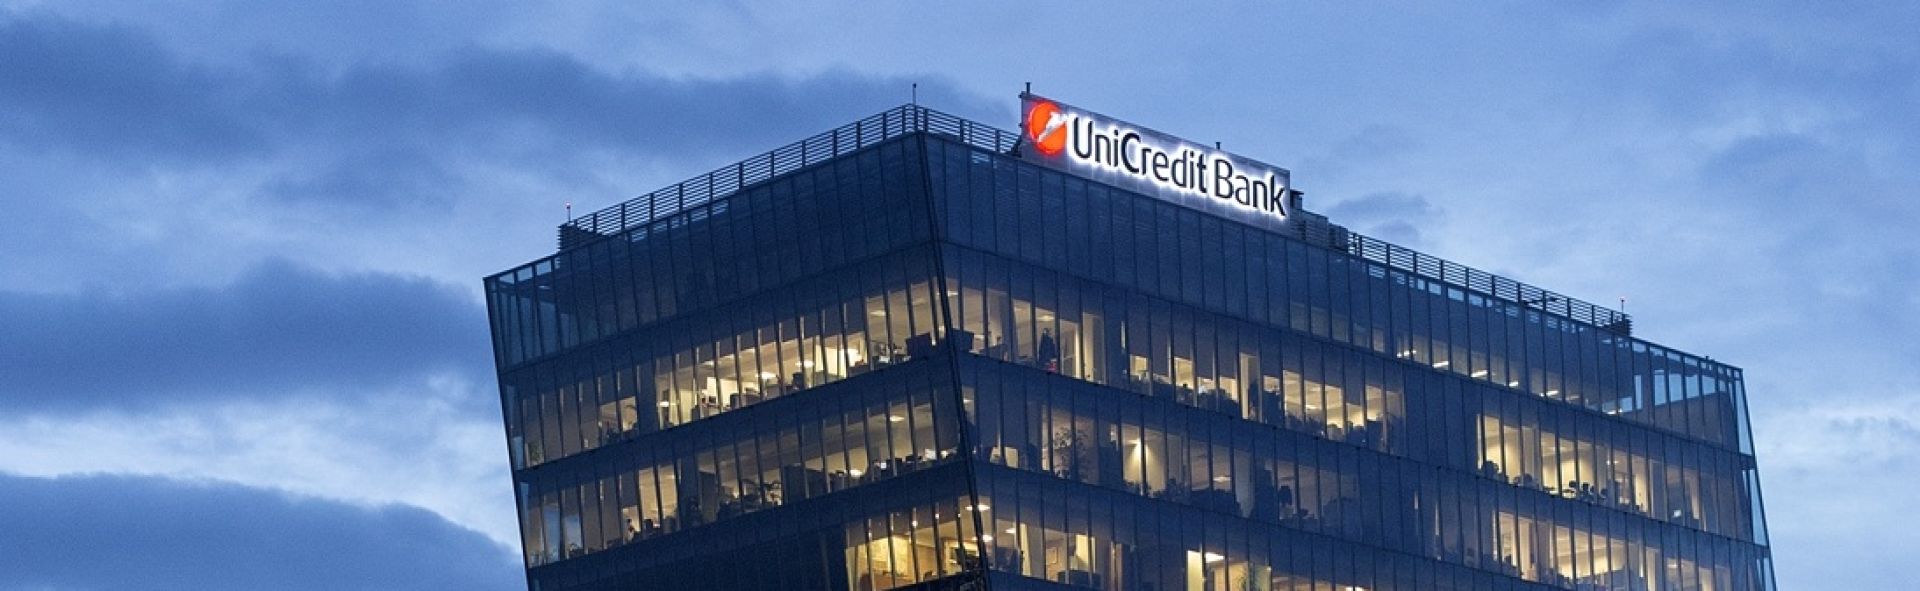 UniCredit Bank a mărit dobânzile la depozite